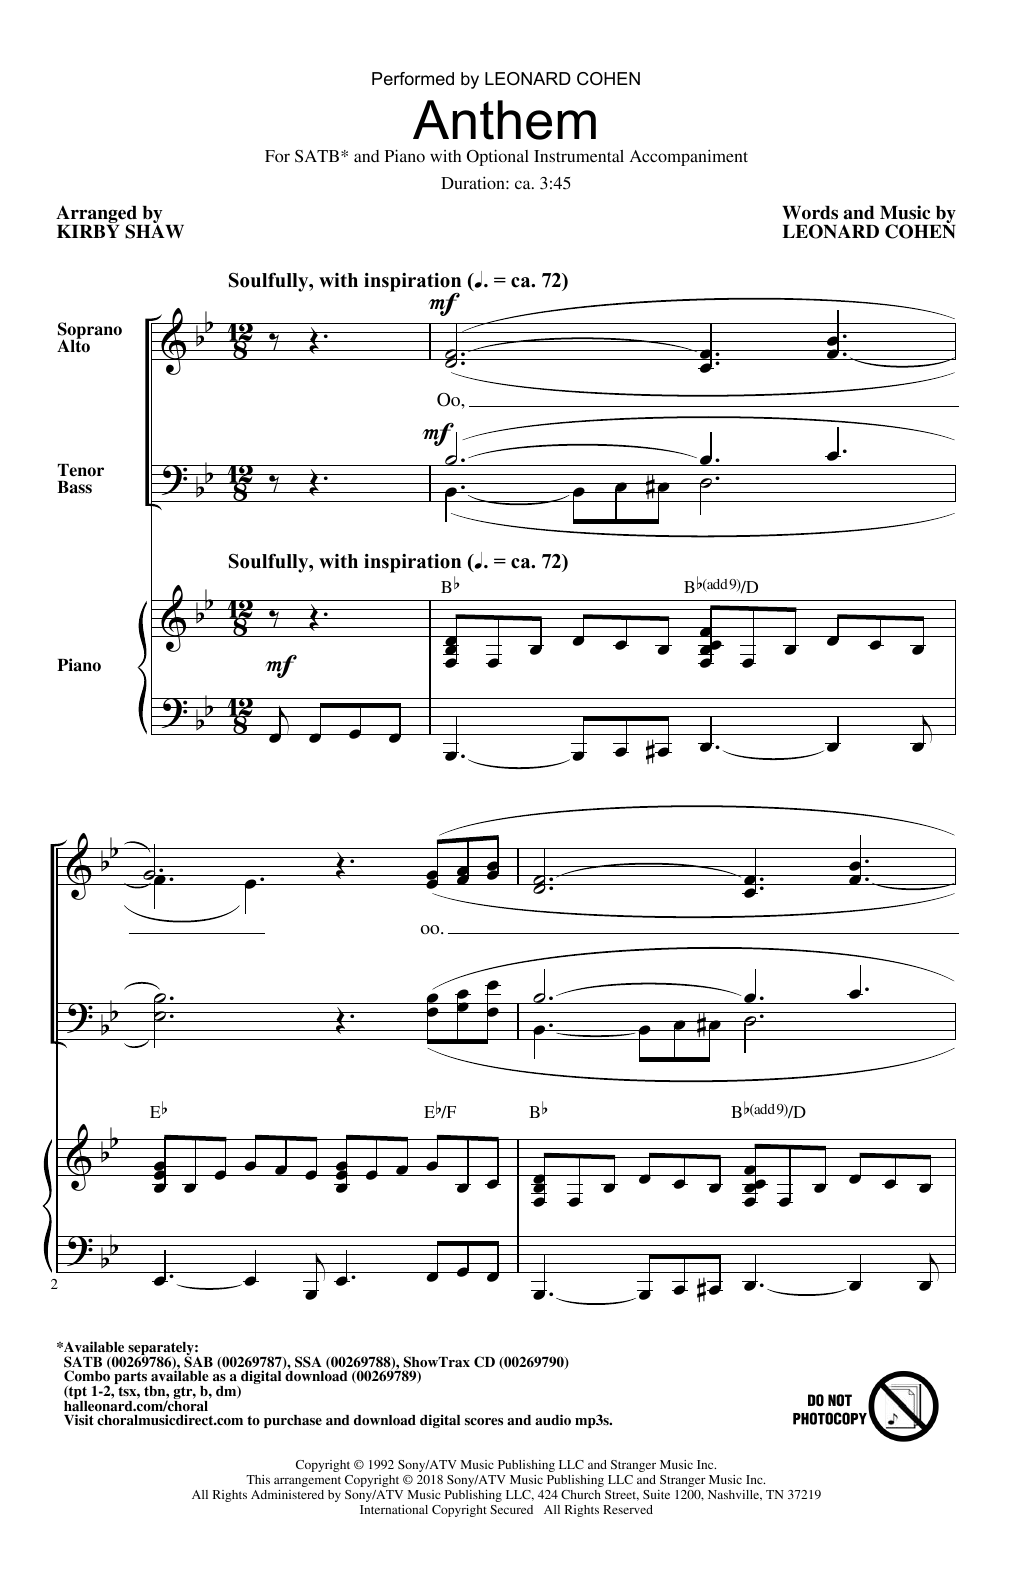 Kirby Shaw Anthem Sheet Music Notes & Chords for SAB - Download or Print PDF